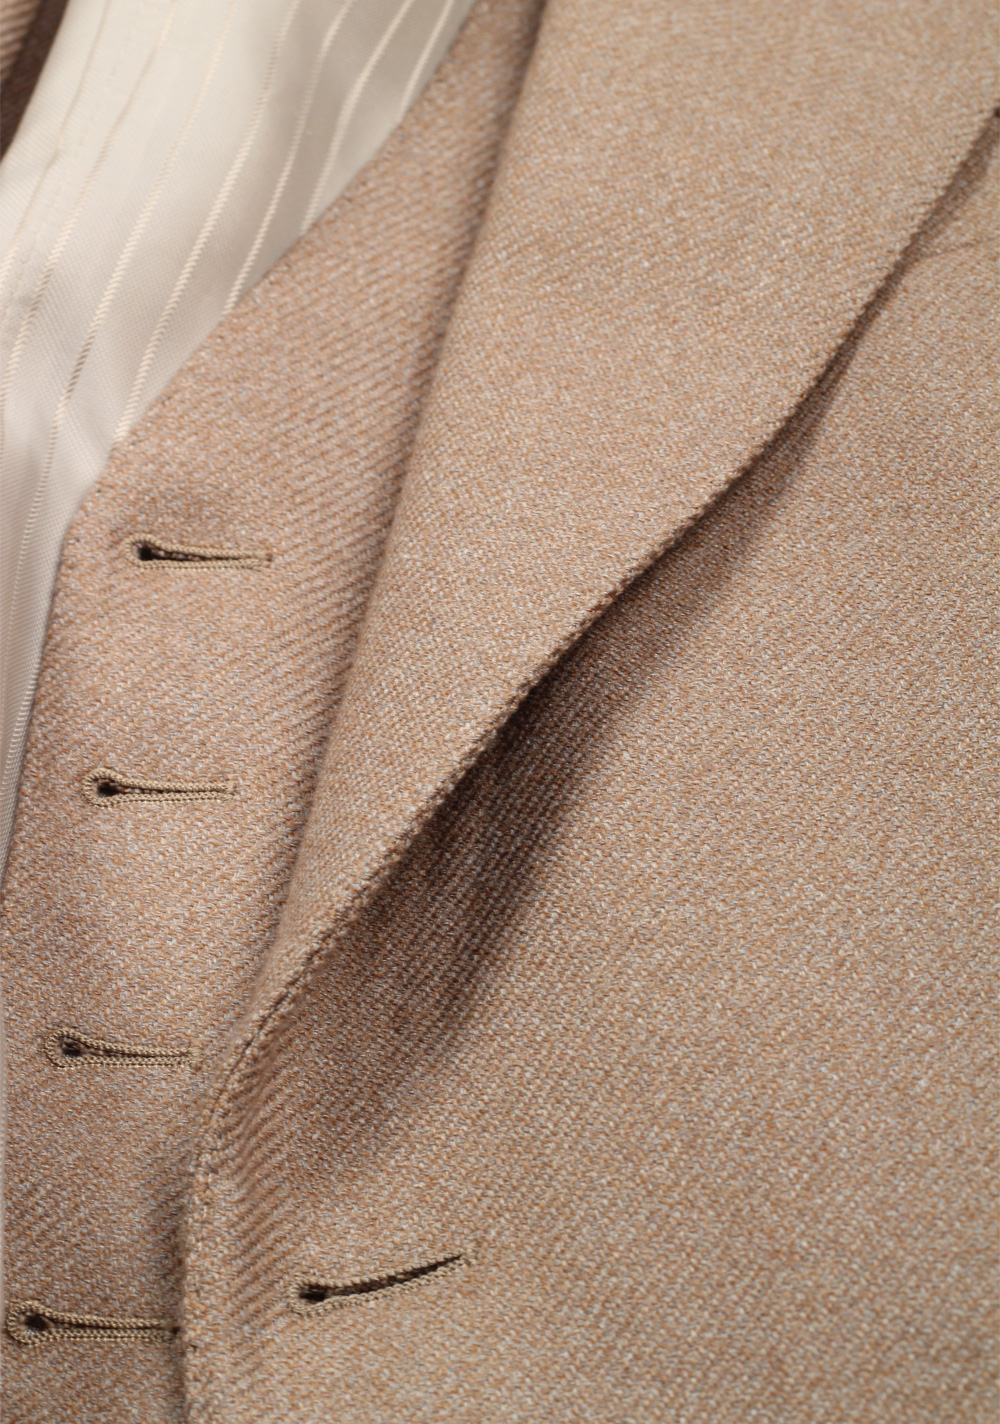 TOM FORD Shelton Solid Camel 3 Piece Suit Size 46 / 36R U.S. Wool | Costume Limité